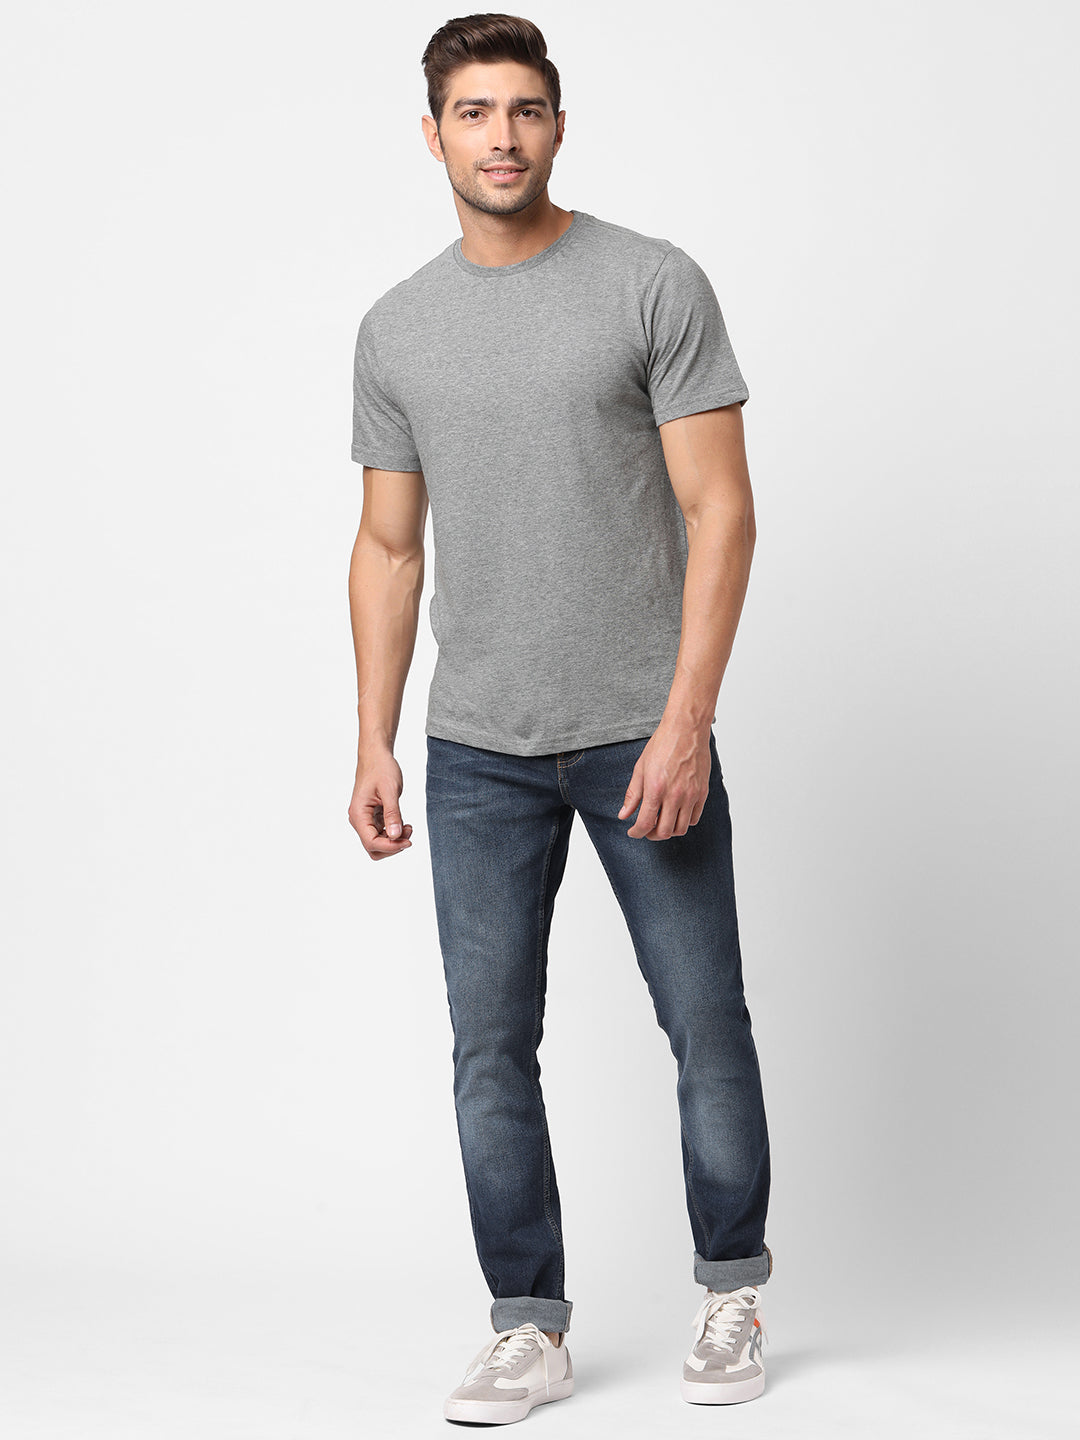 Men's Light Grey Cotton Regular Fit Tshirts